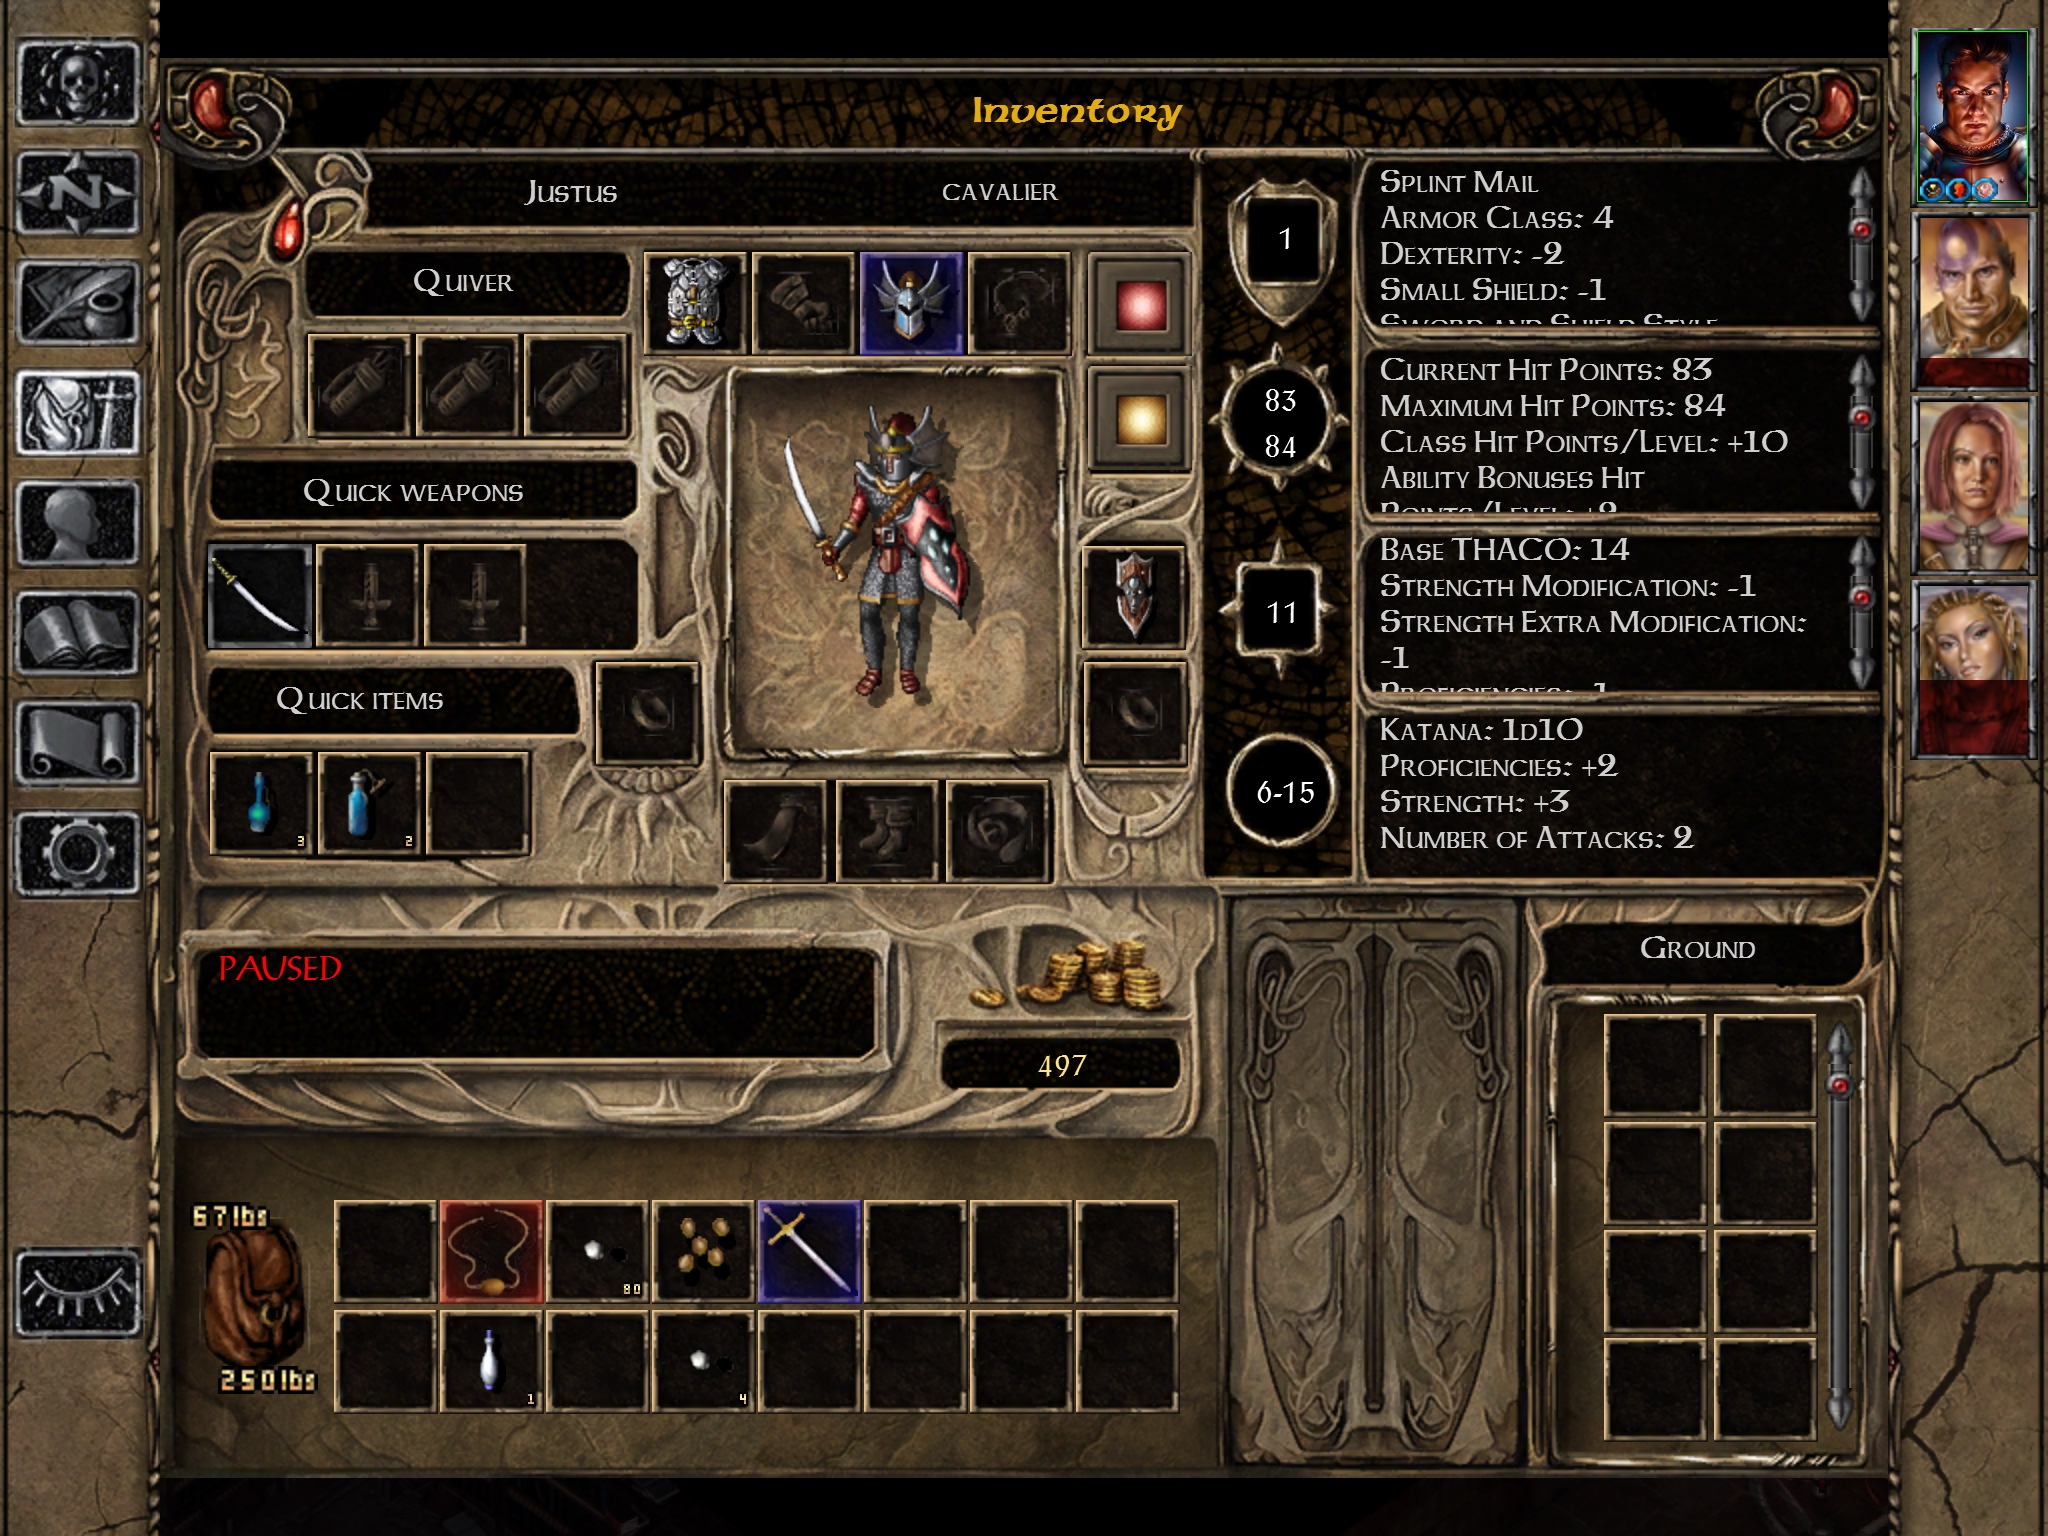 Baldur's Gate II: Enhanced Edition is half price for the next few days